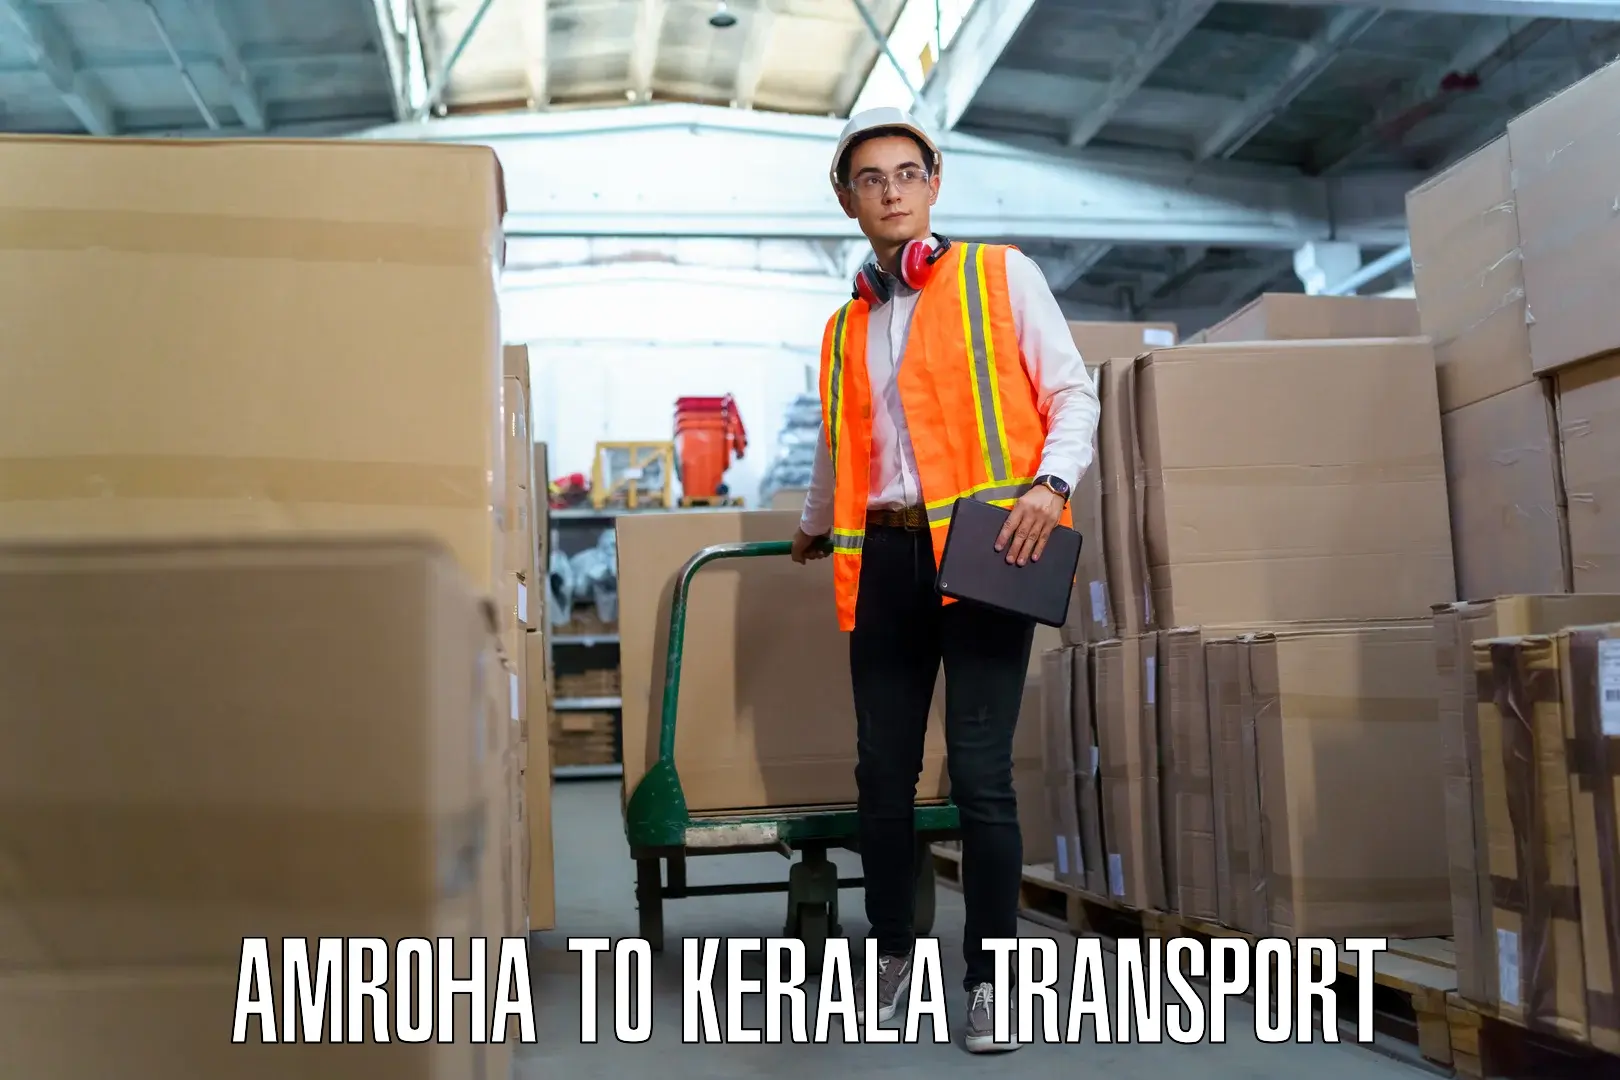 Daily transport service Amroha to Kochi